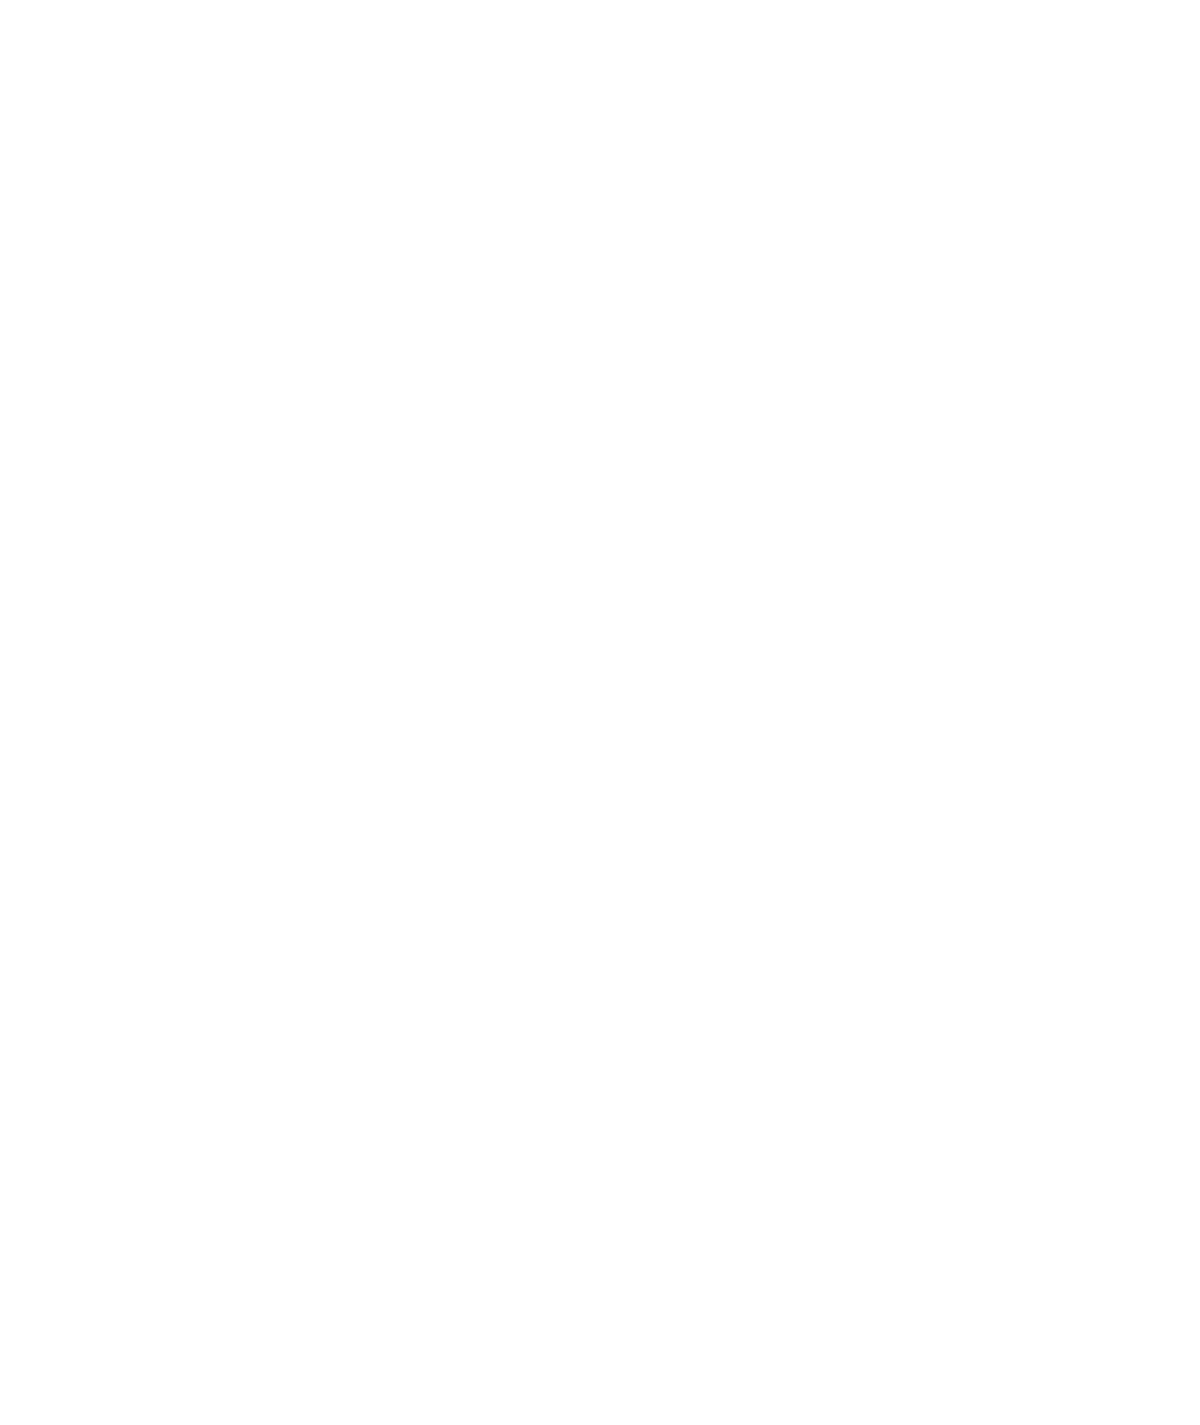 File:Apple logo white.svg - Wikimedia Commons